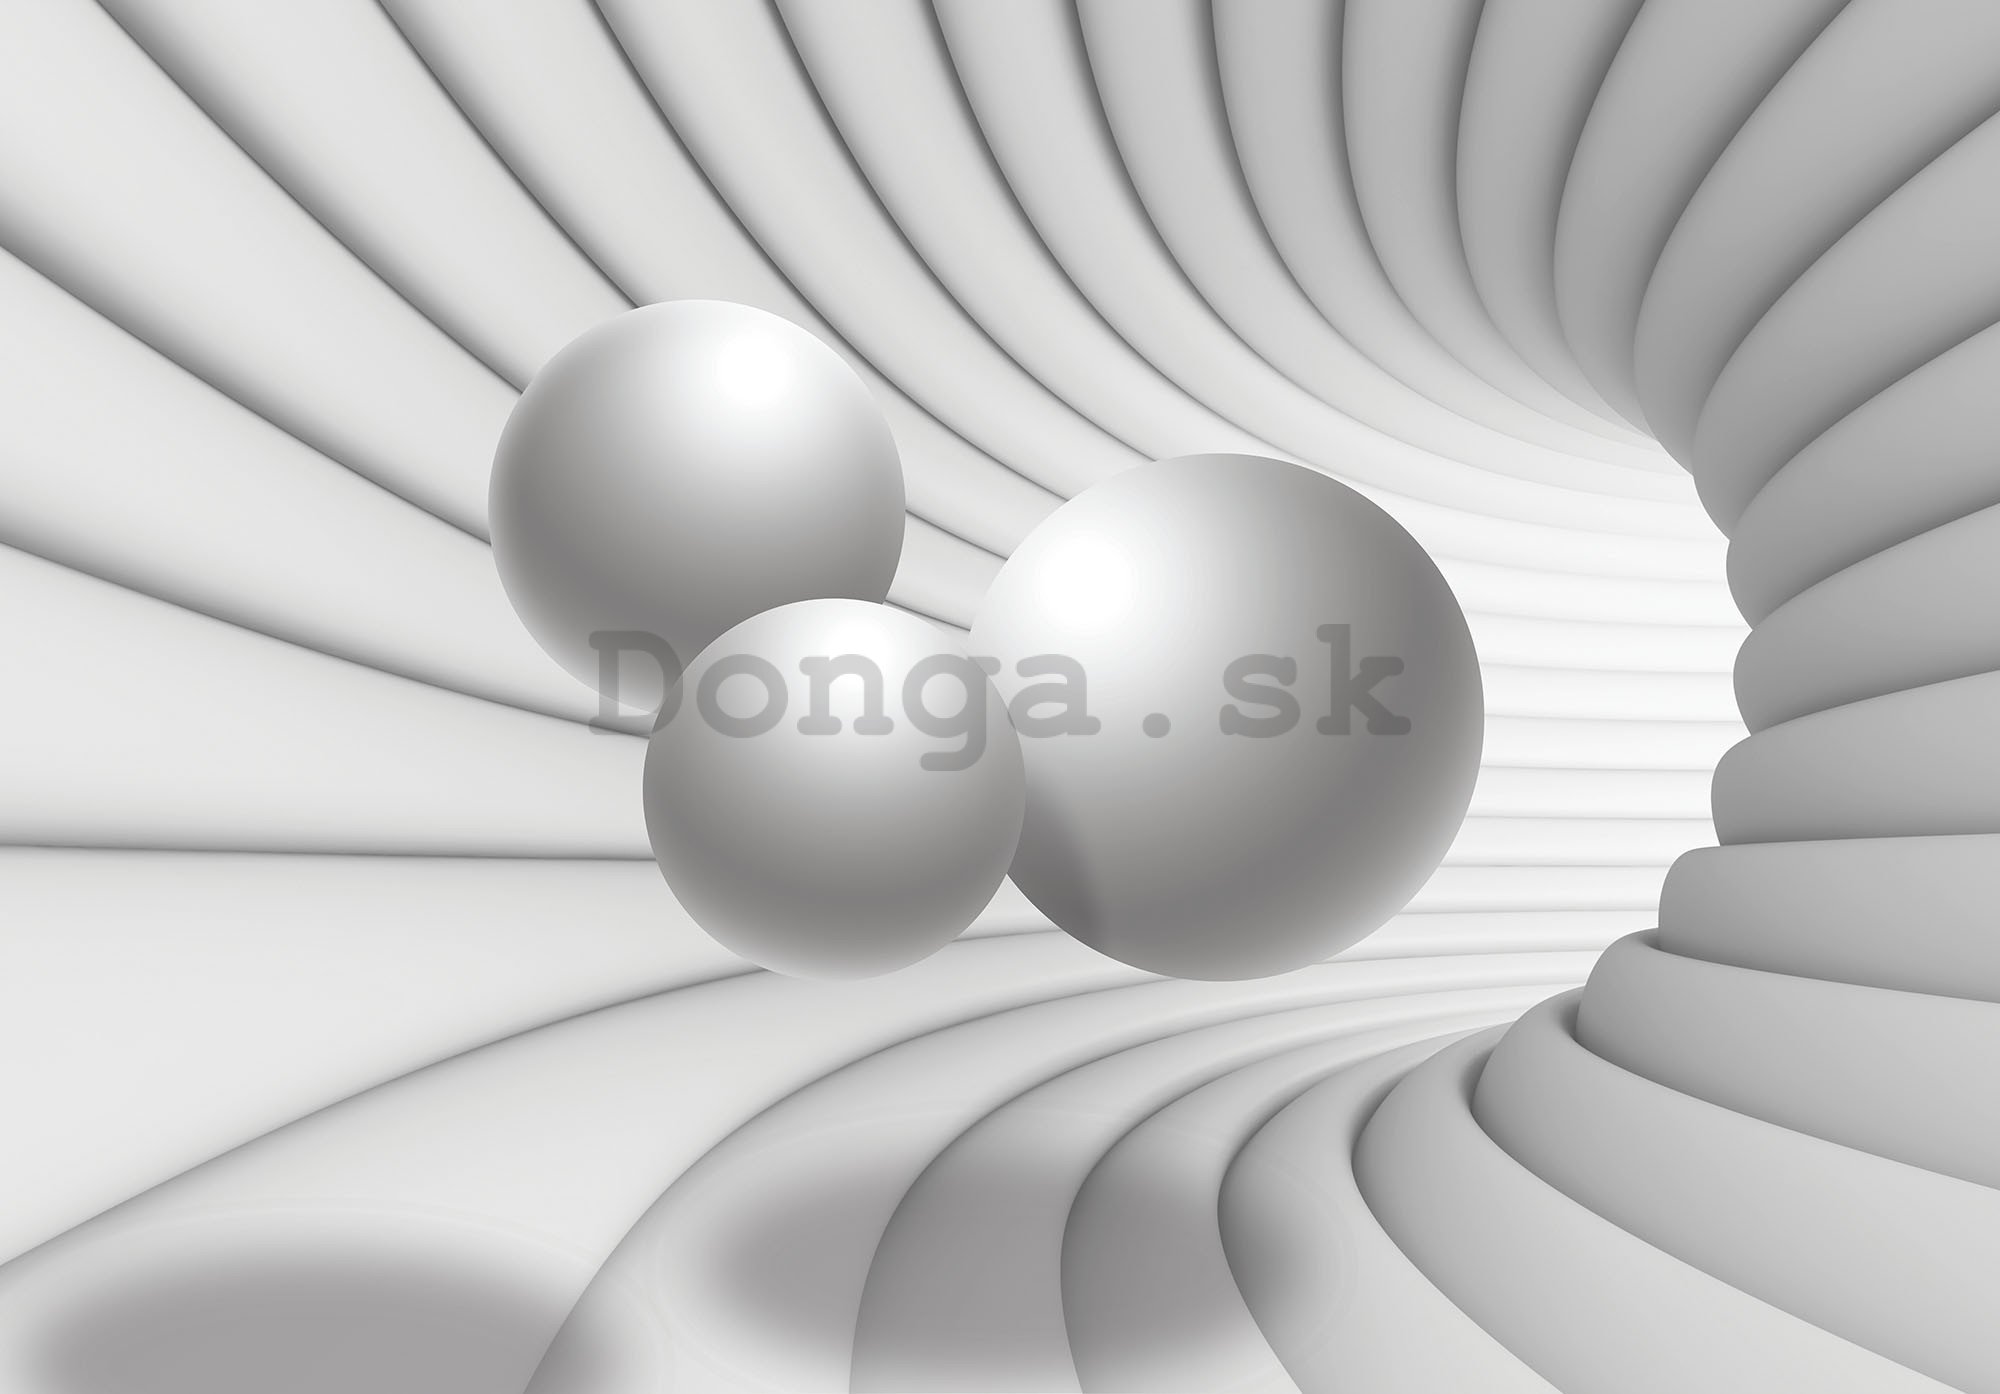 Fototapeta vliesová: 3D tunel (biely) - 416x254 cm